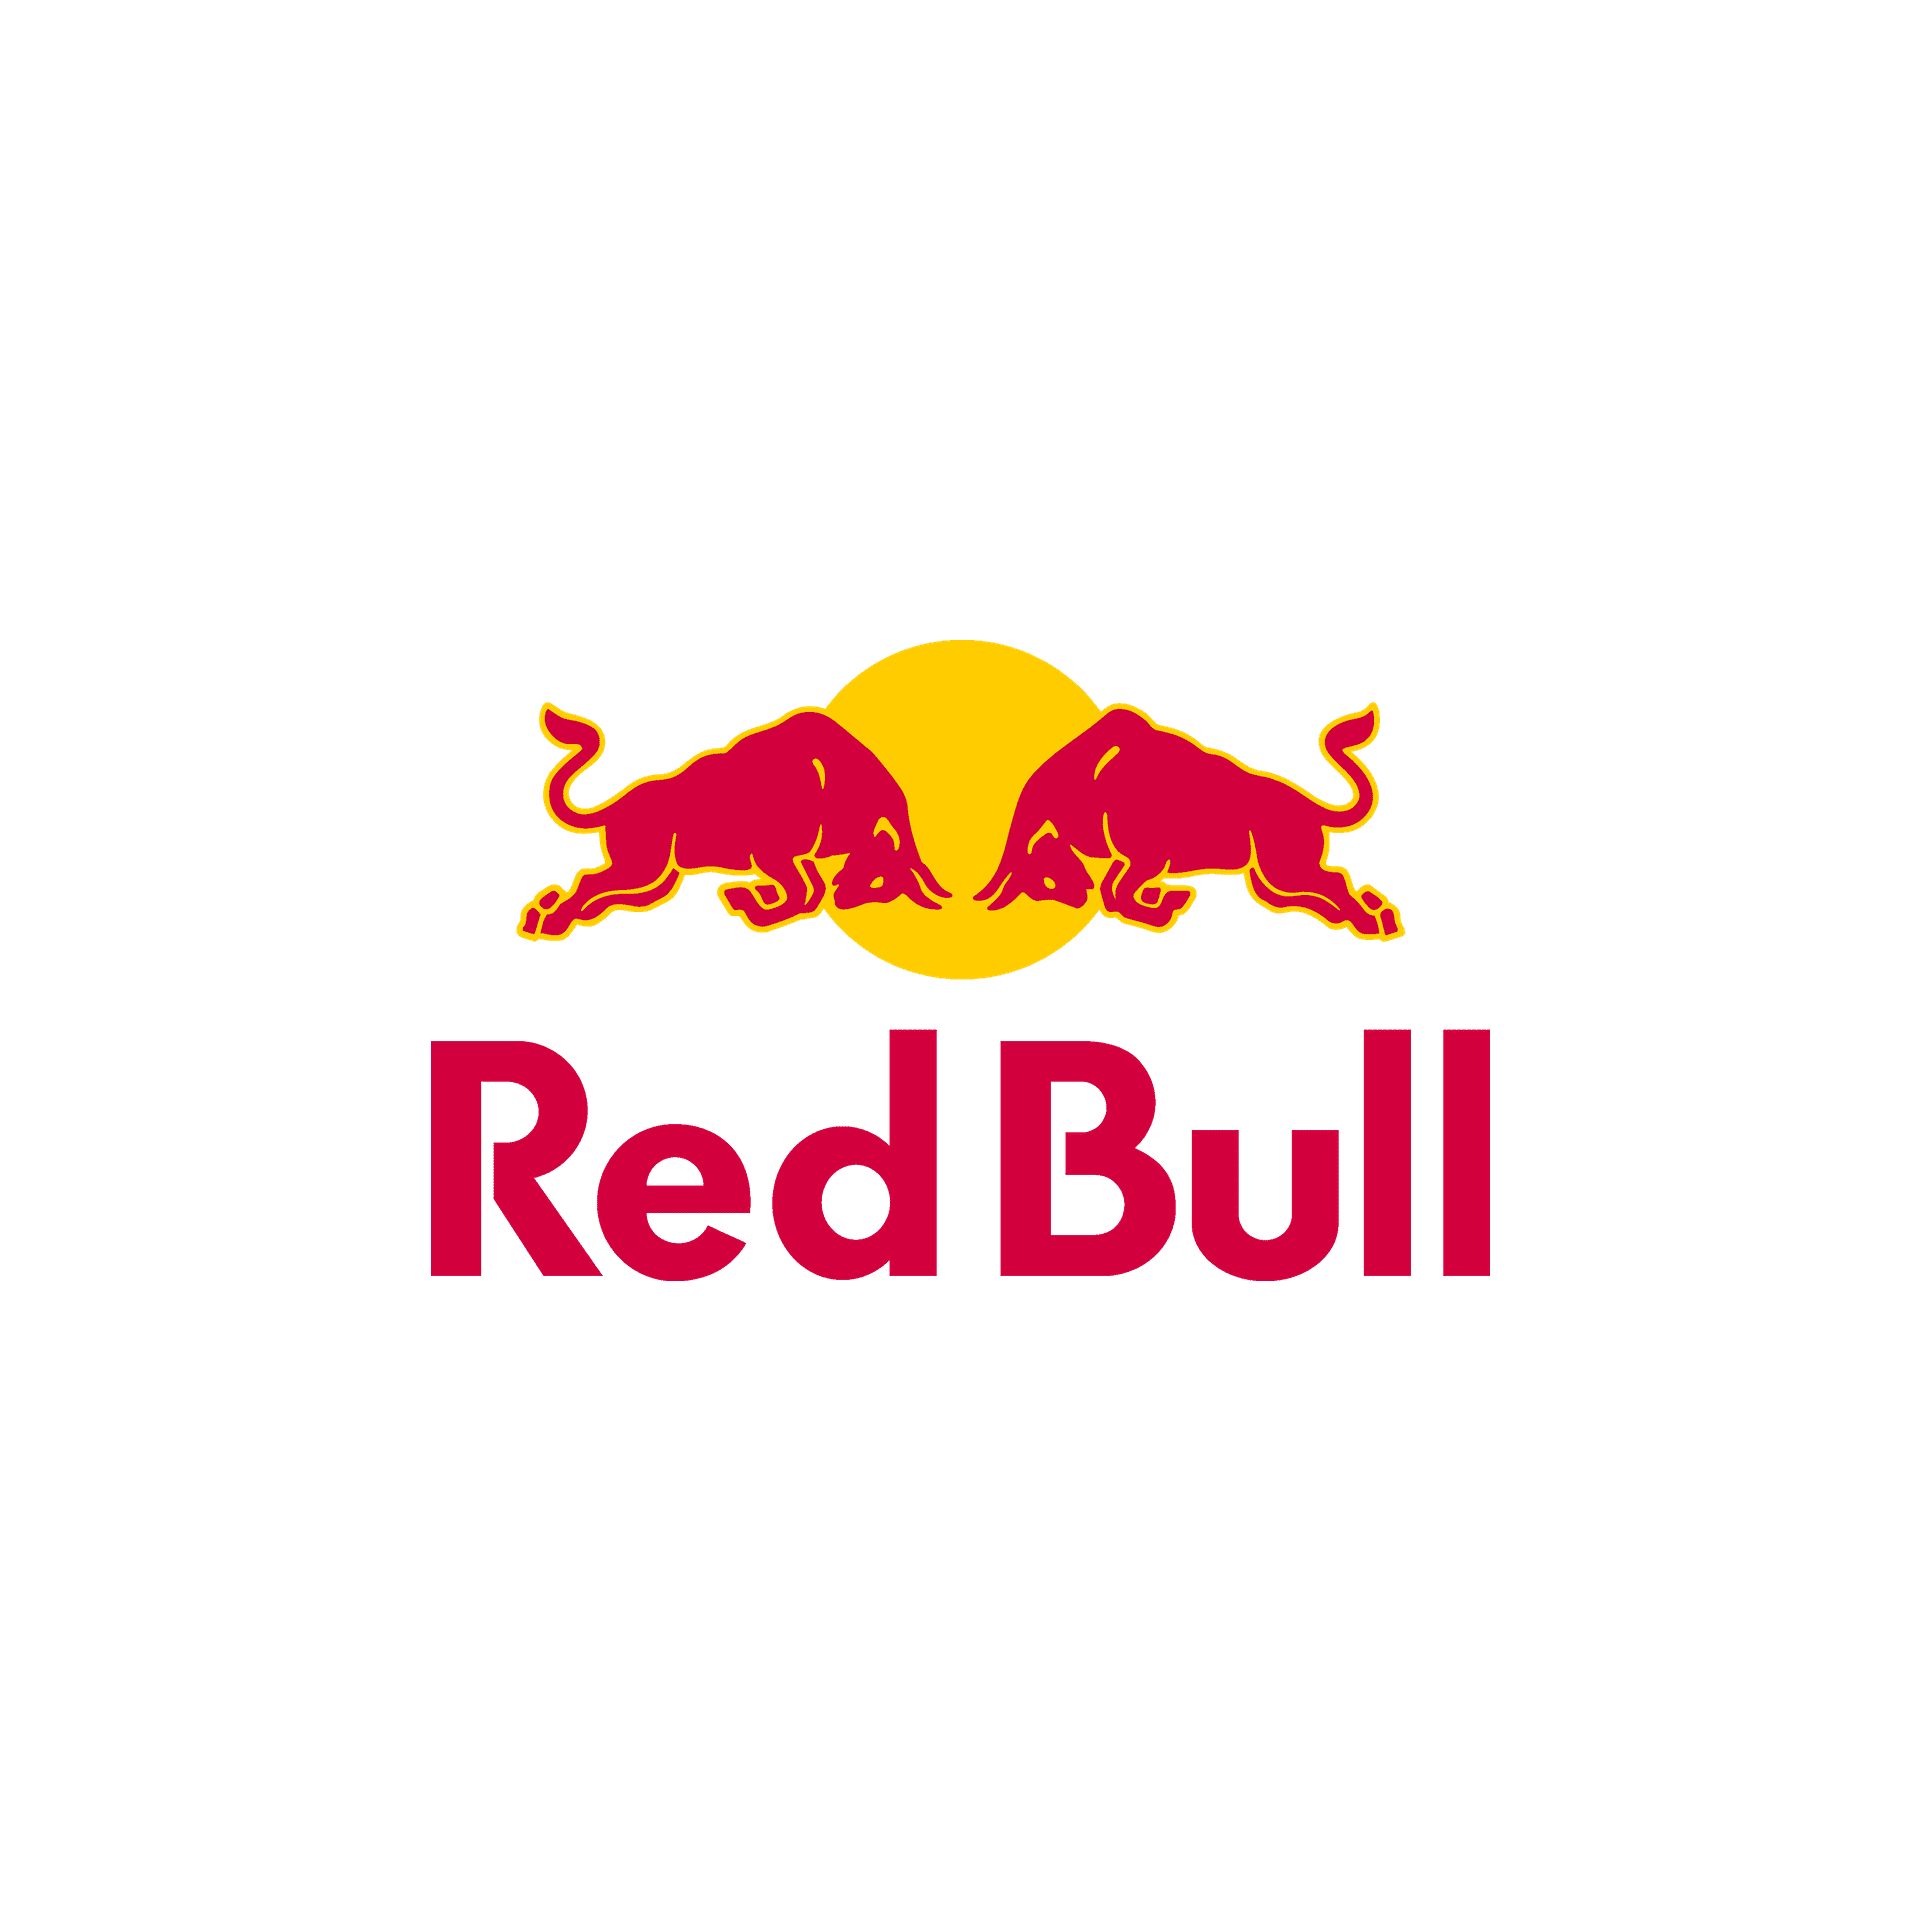 Sponsor ufficiale, Red Bull